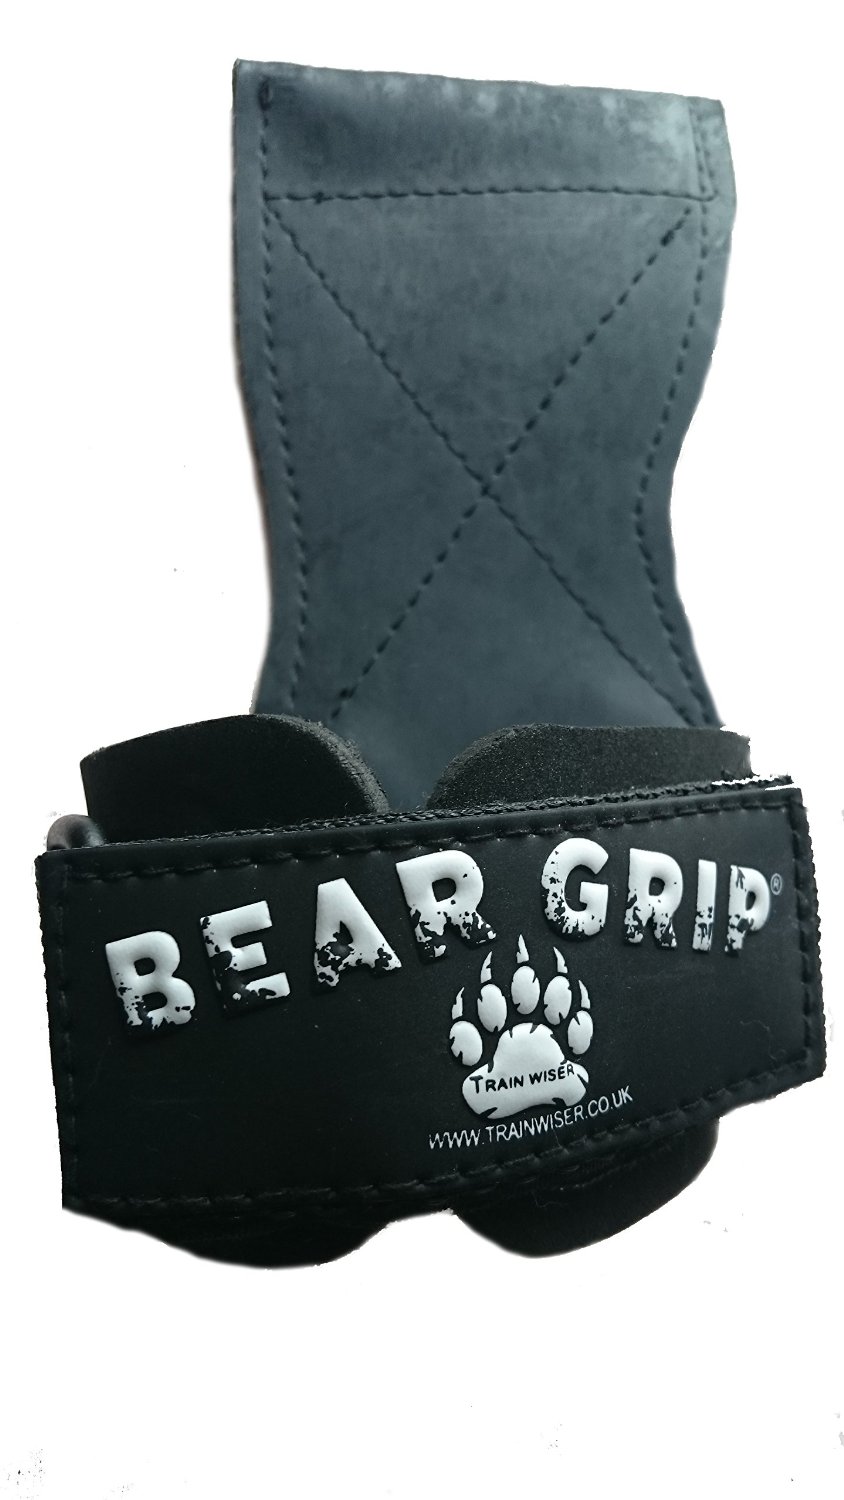 Premium Heavy duty weight lifting straps/gloves BEAR GRIP Multi Grip Straps/Hooks